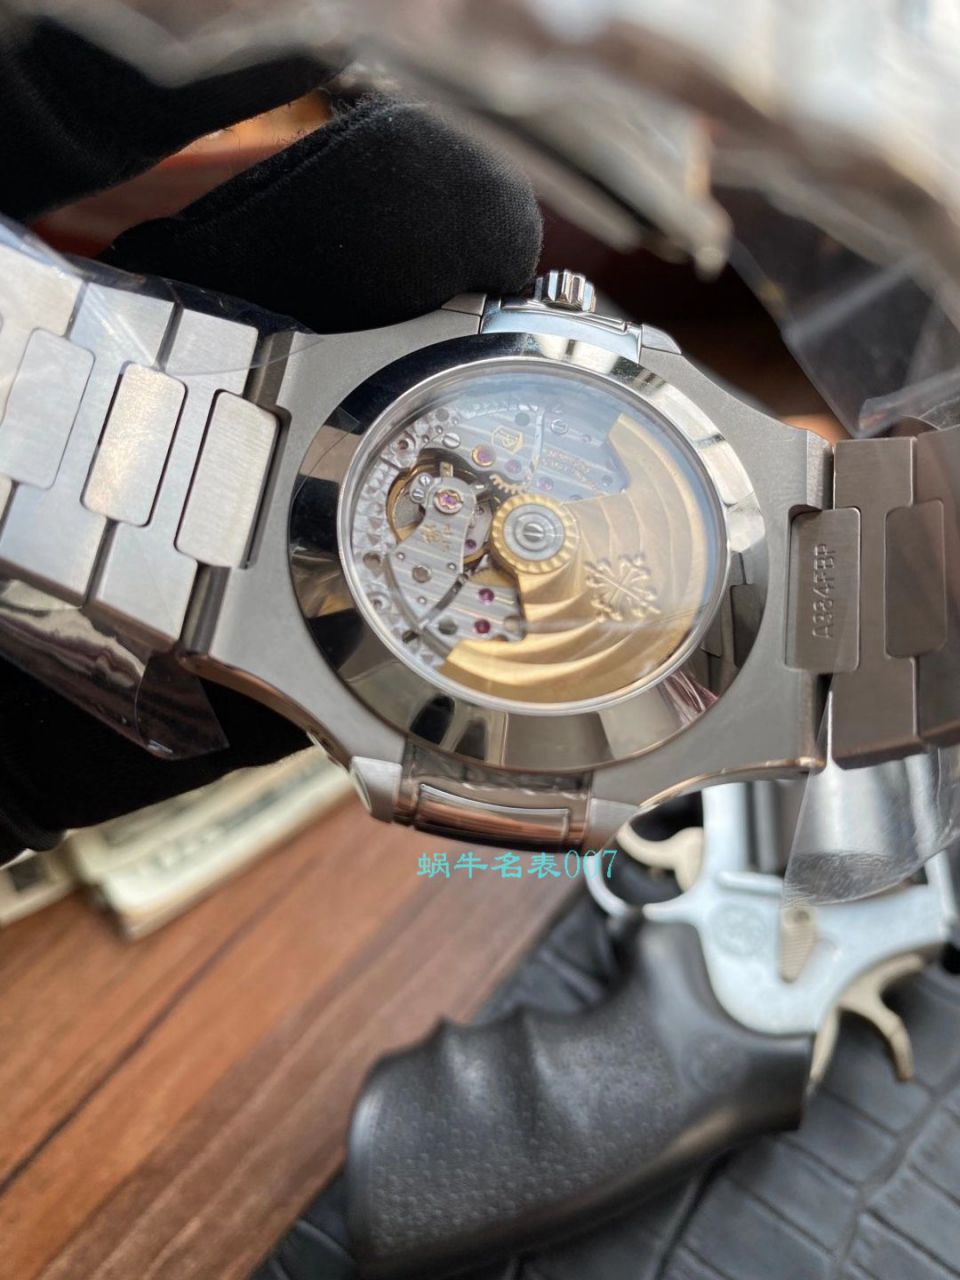 GR厂百达翡丽鹦鹉螺复刻手表V2版本5726/1A-010腕表 / BD328